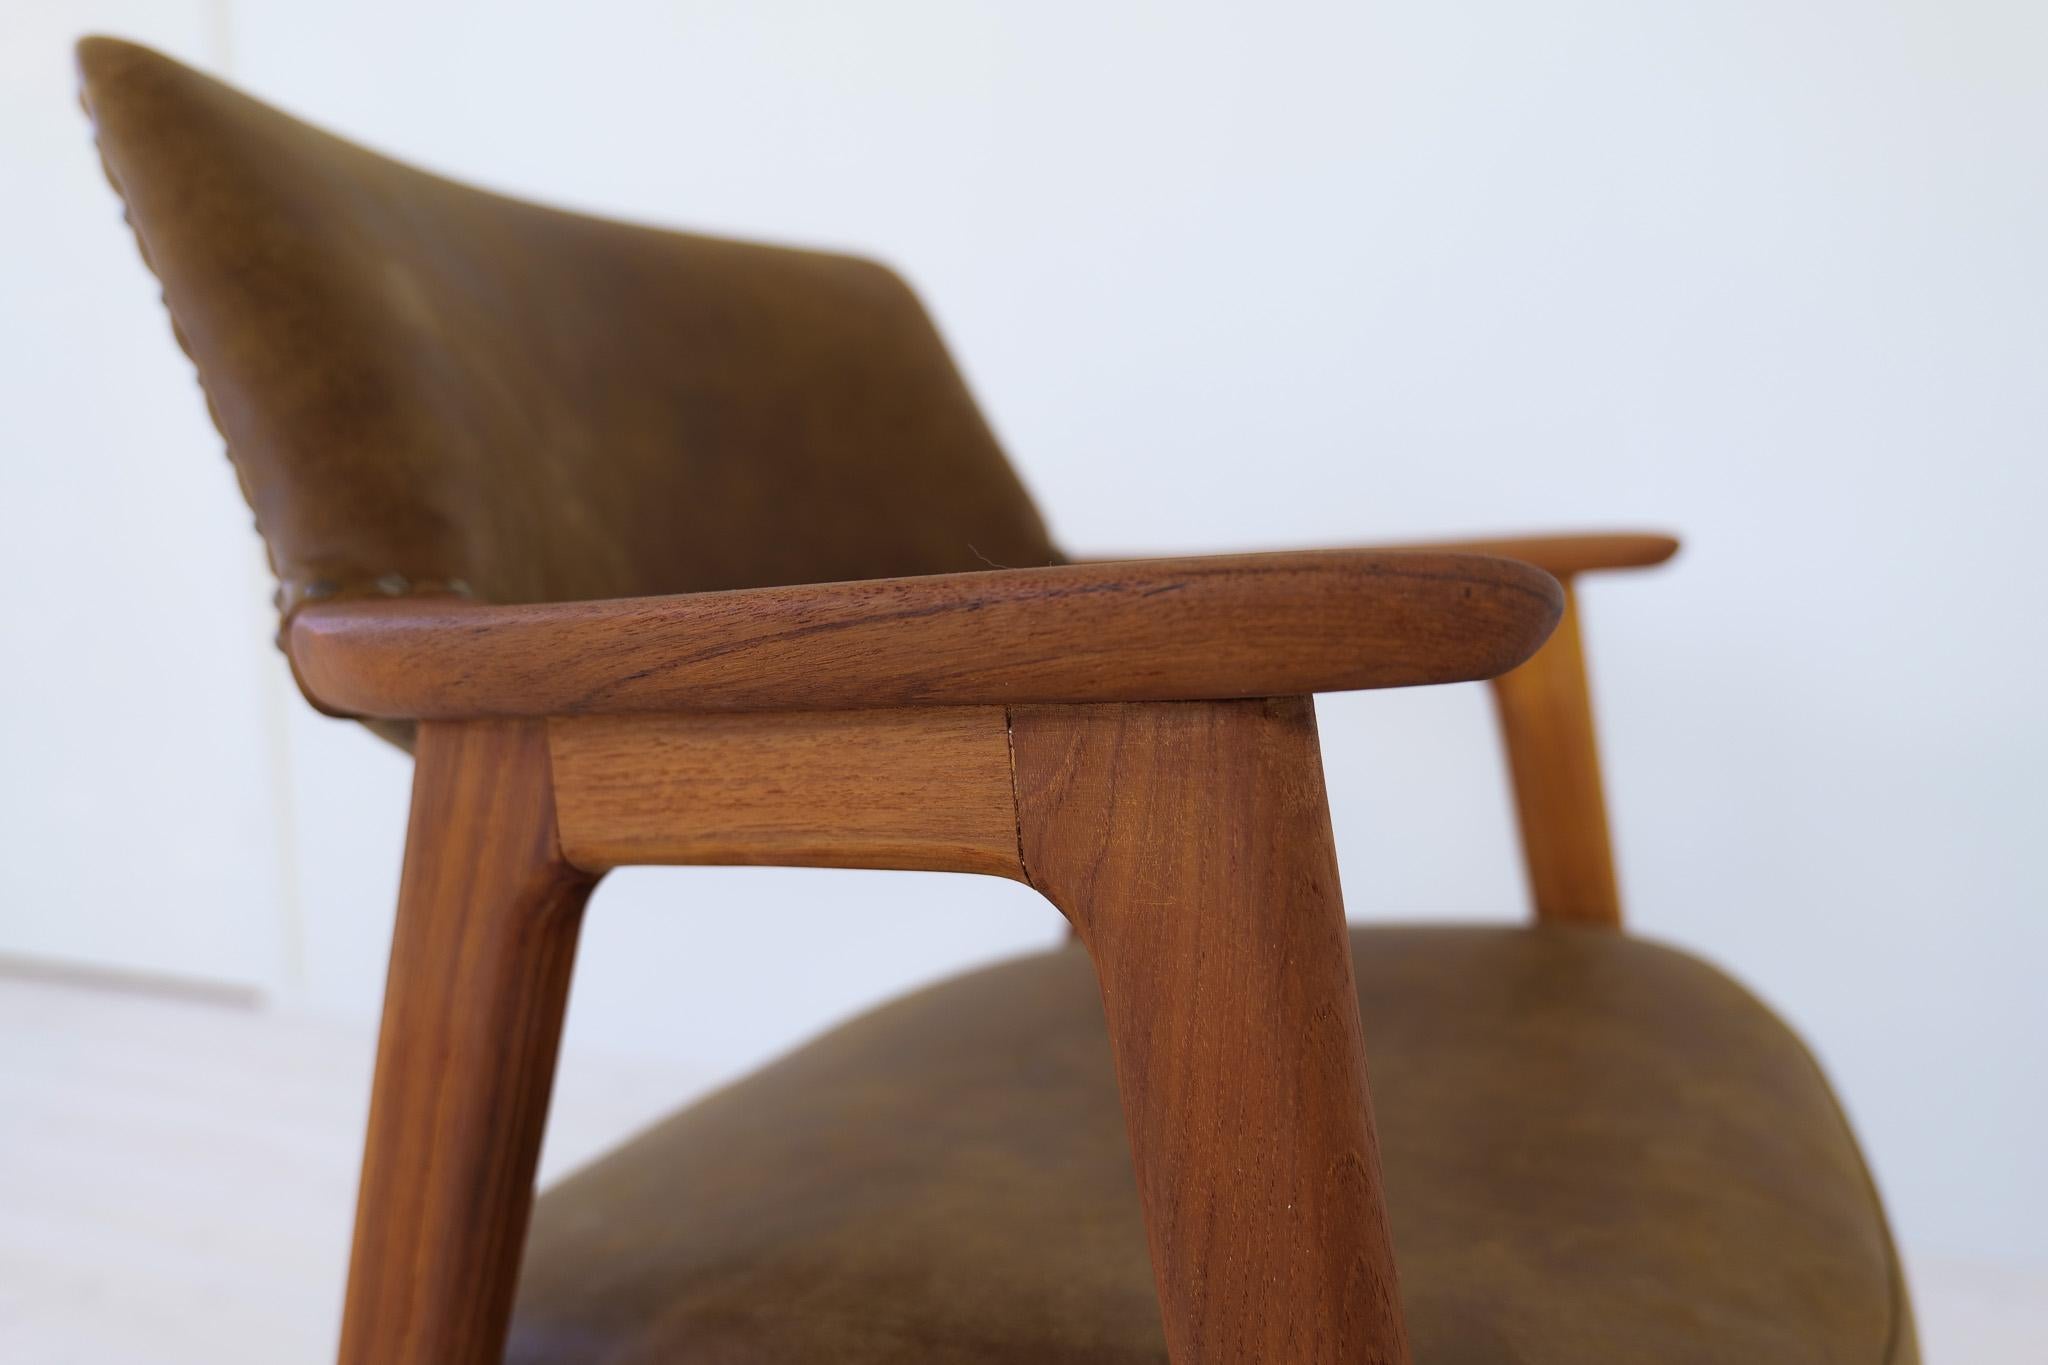 Midcentury Modern Erik Kirkegaard Danish Teak and Leather Desk Chairs, 1960s For Sale 7